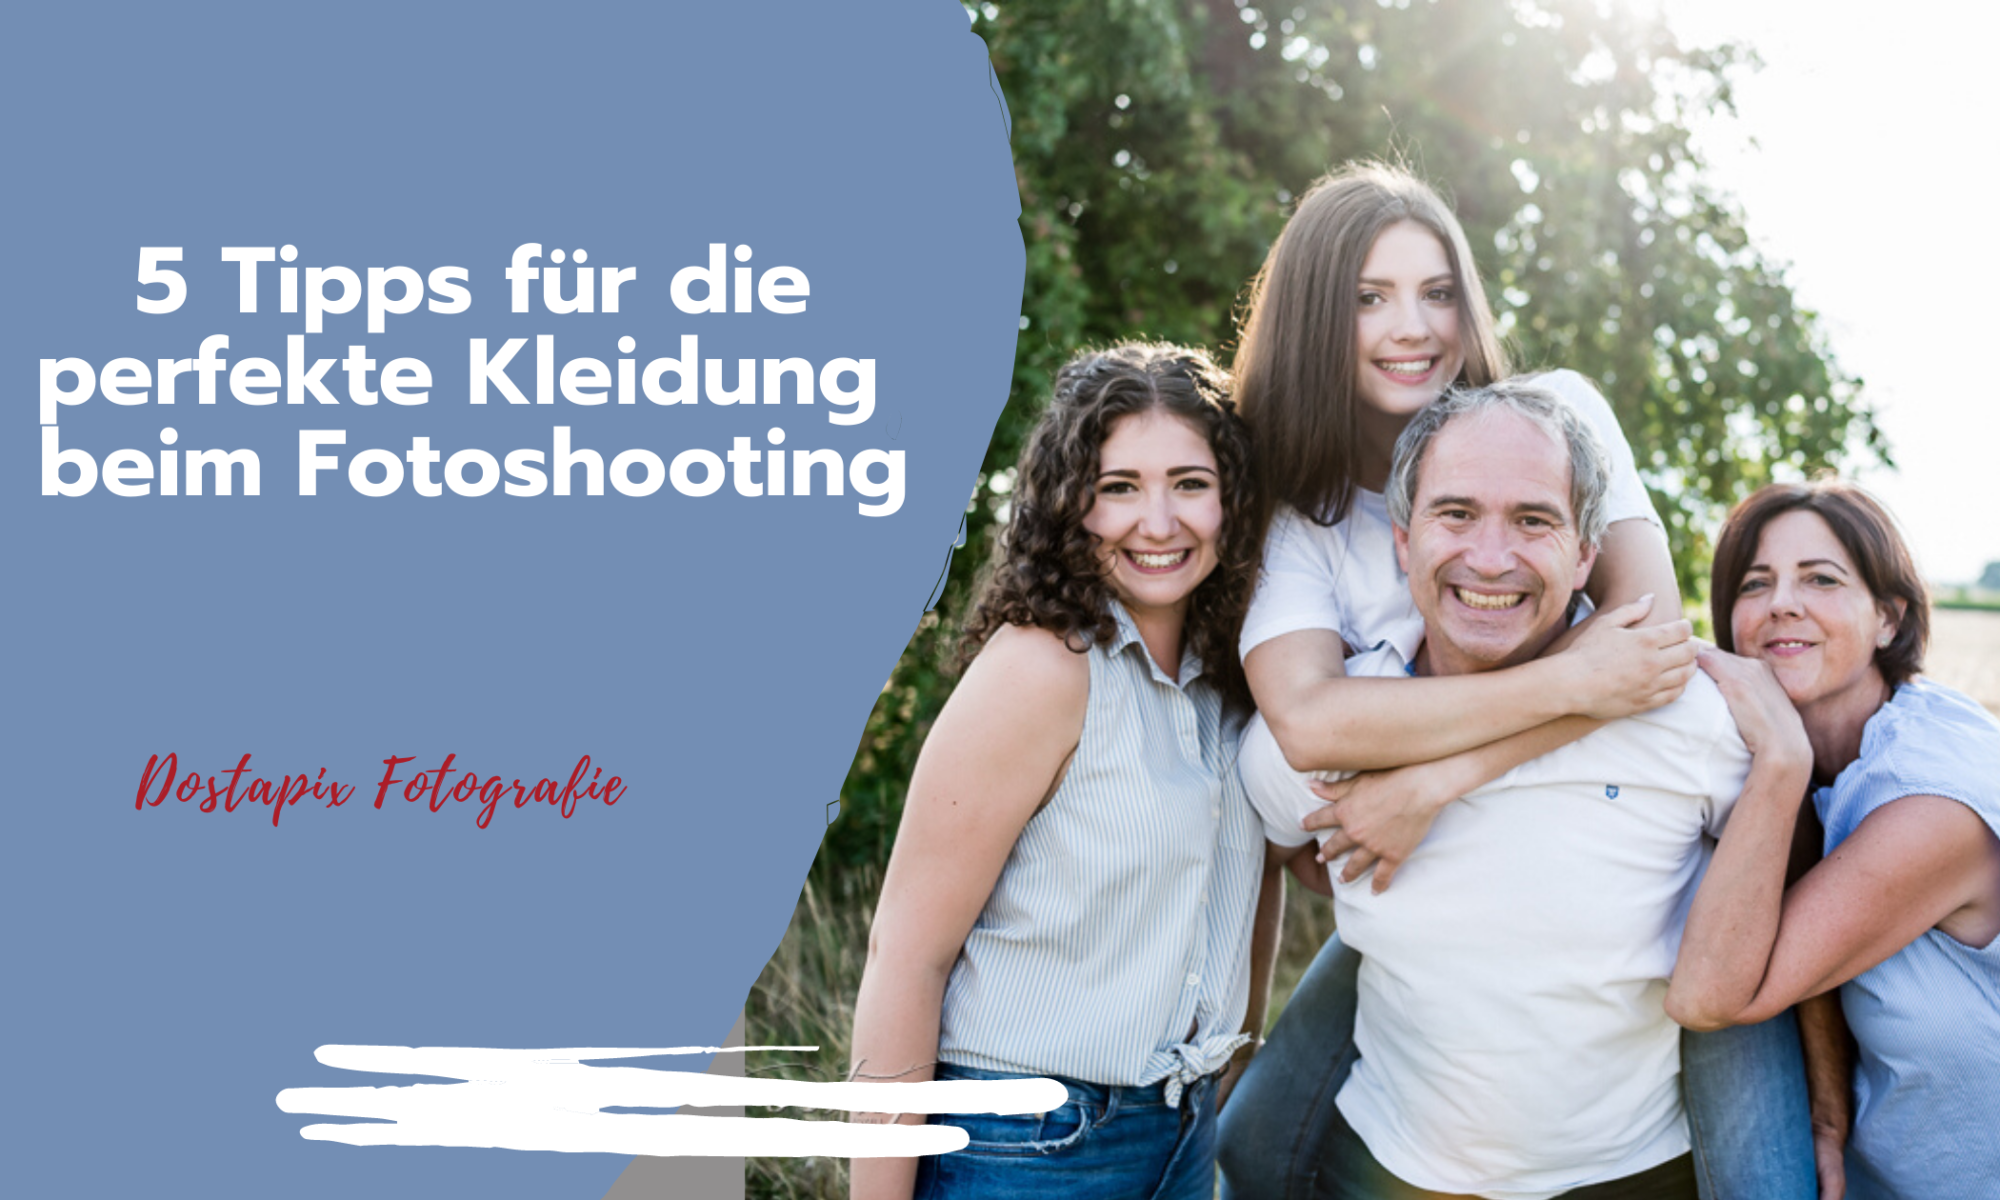 Familienfotos Familienfotograf Nürnberg Fürth Zirndorf familienfotografie Dostapix Fotografie familienfotografin